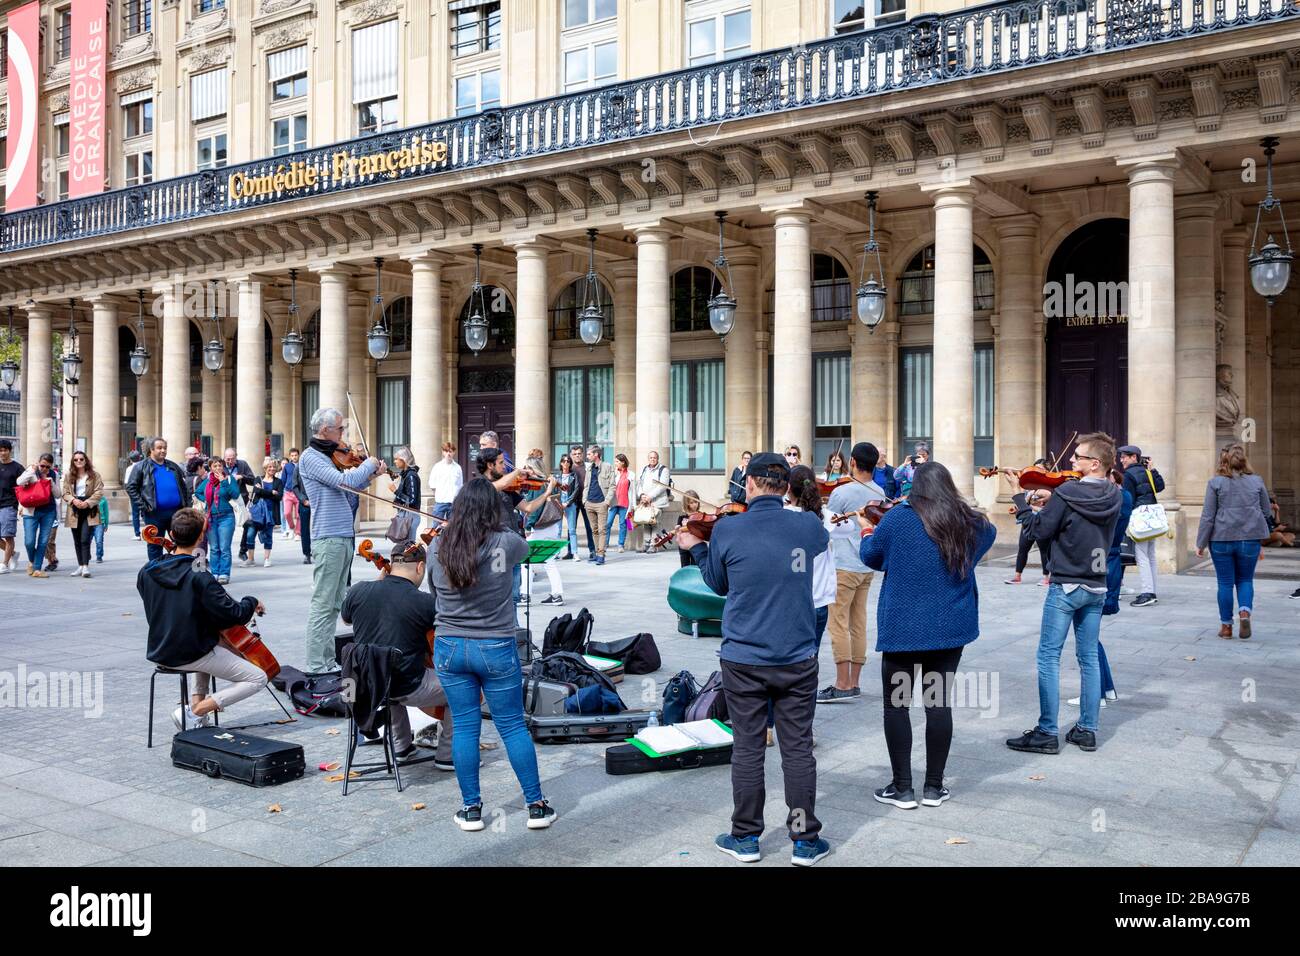 String Ensemble suona musica classica da camera a Place Colette adiacente al Palais Royal, Parigi, Francia Foto Stock